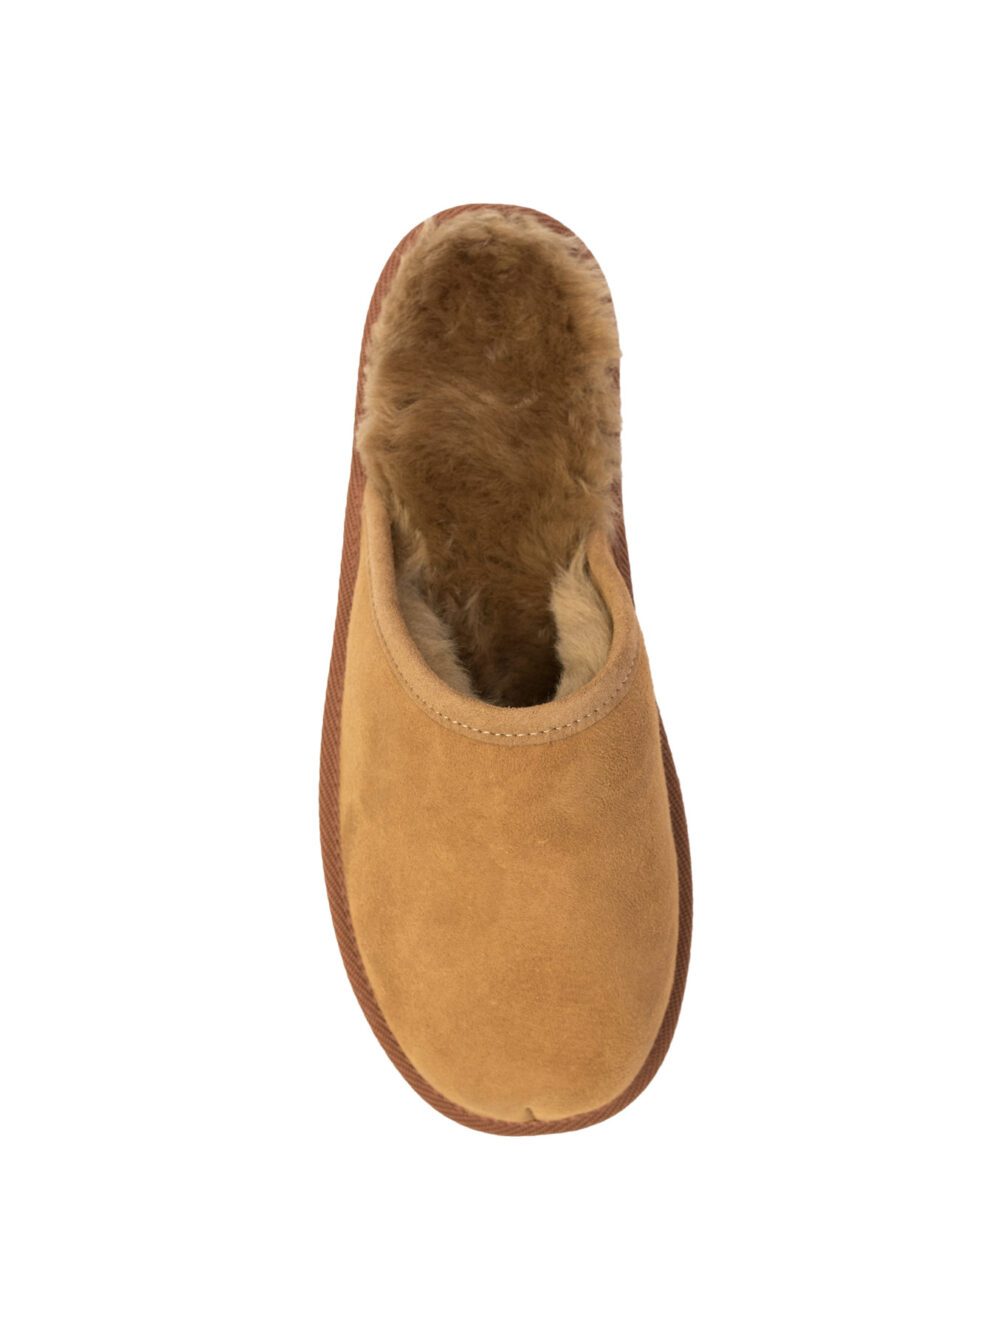 Men’s slippers Caldor Classic Sand Accessories Producent owczych skór dekoracyjnych | Tannery Sheepskin | KalSkór 5